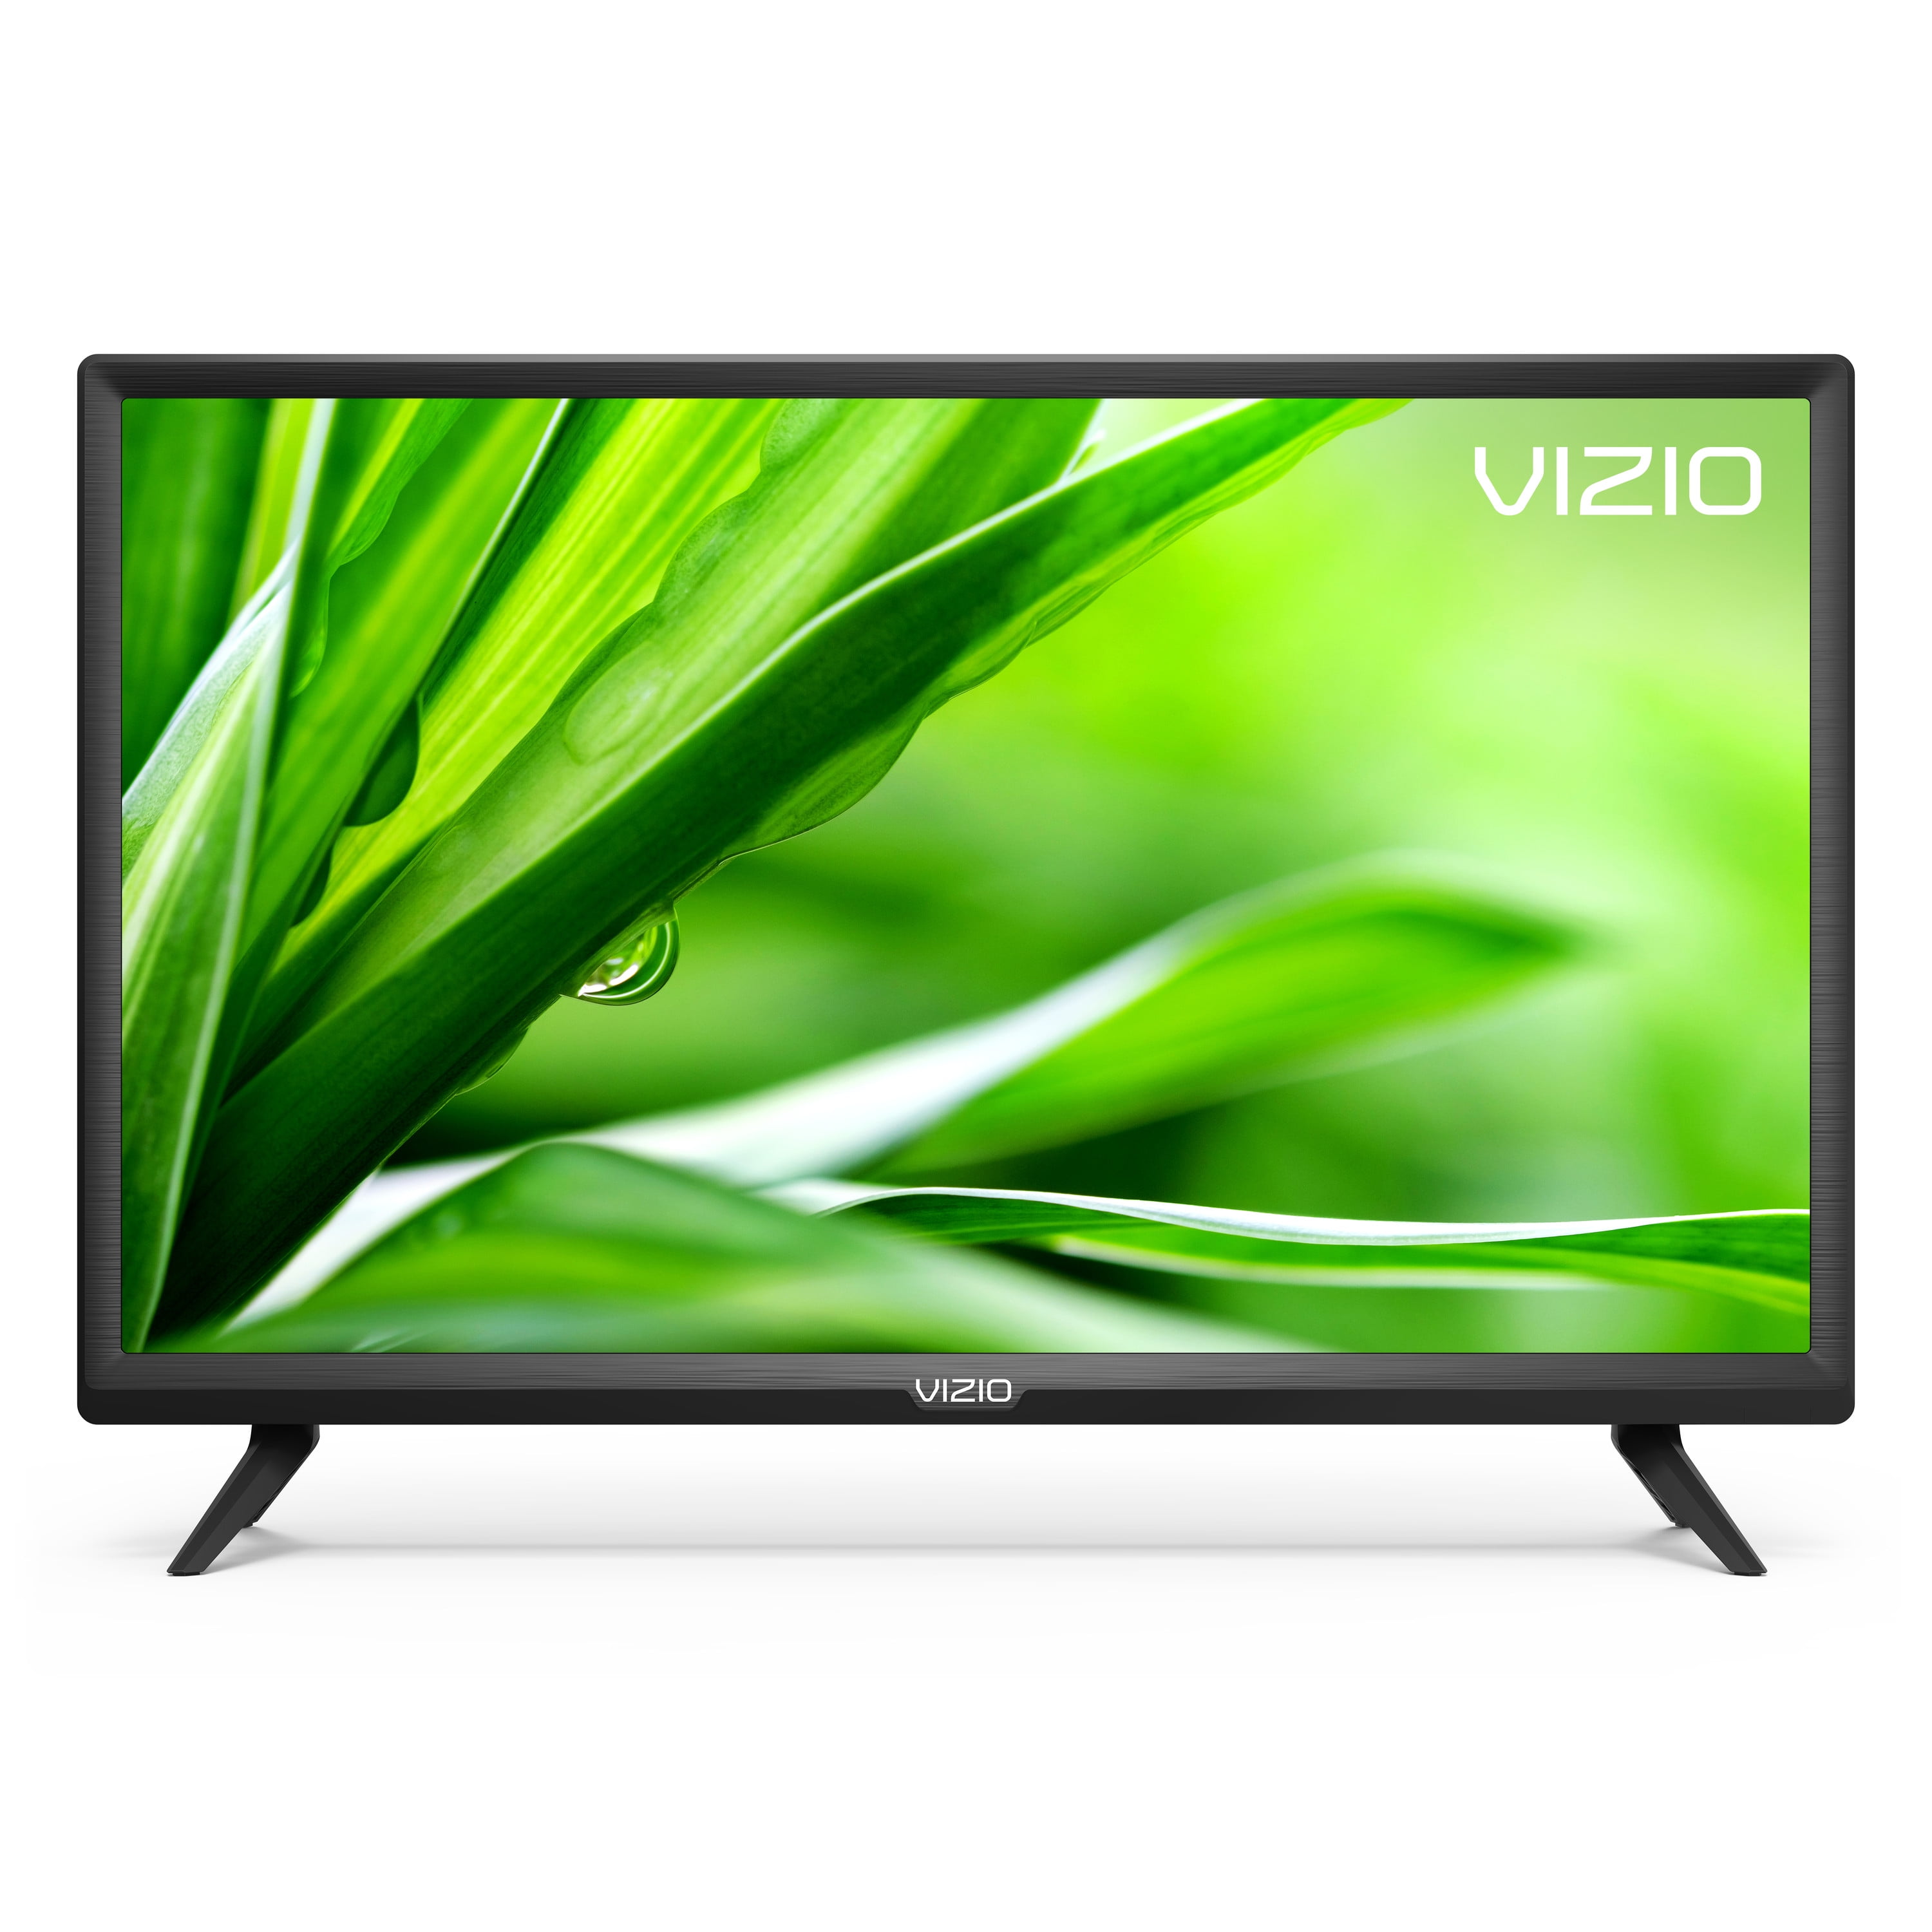 24" Class HDTV VIZIO LED 720p D-Series Smart 